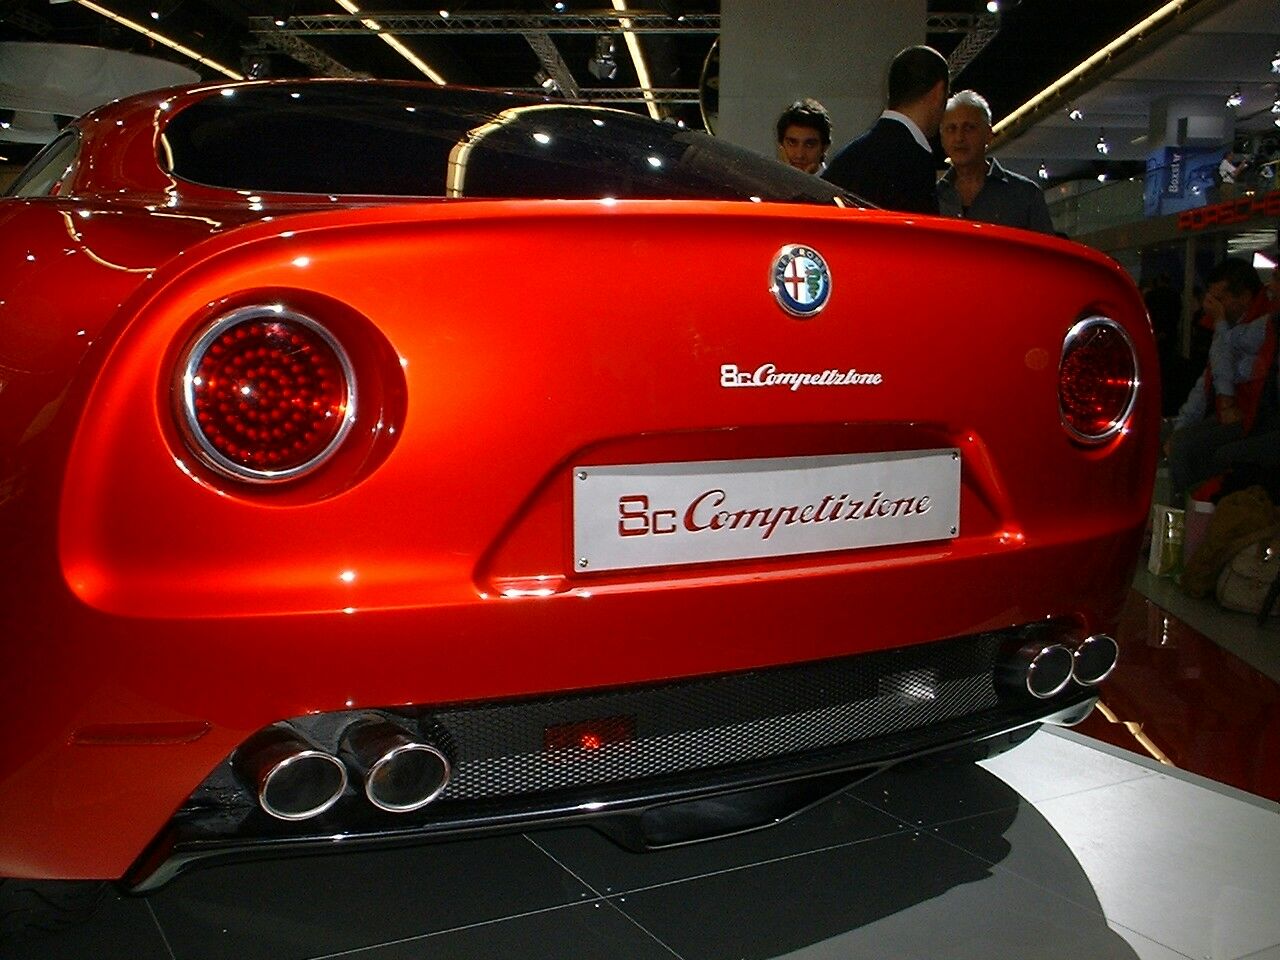 Alfa Romeo 8c Competizione is unveiled at the 2003 Frankfurt Motor Show